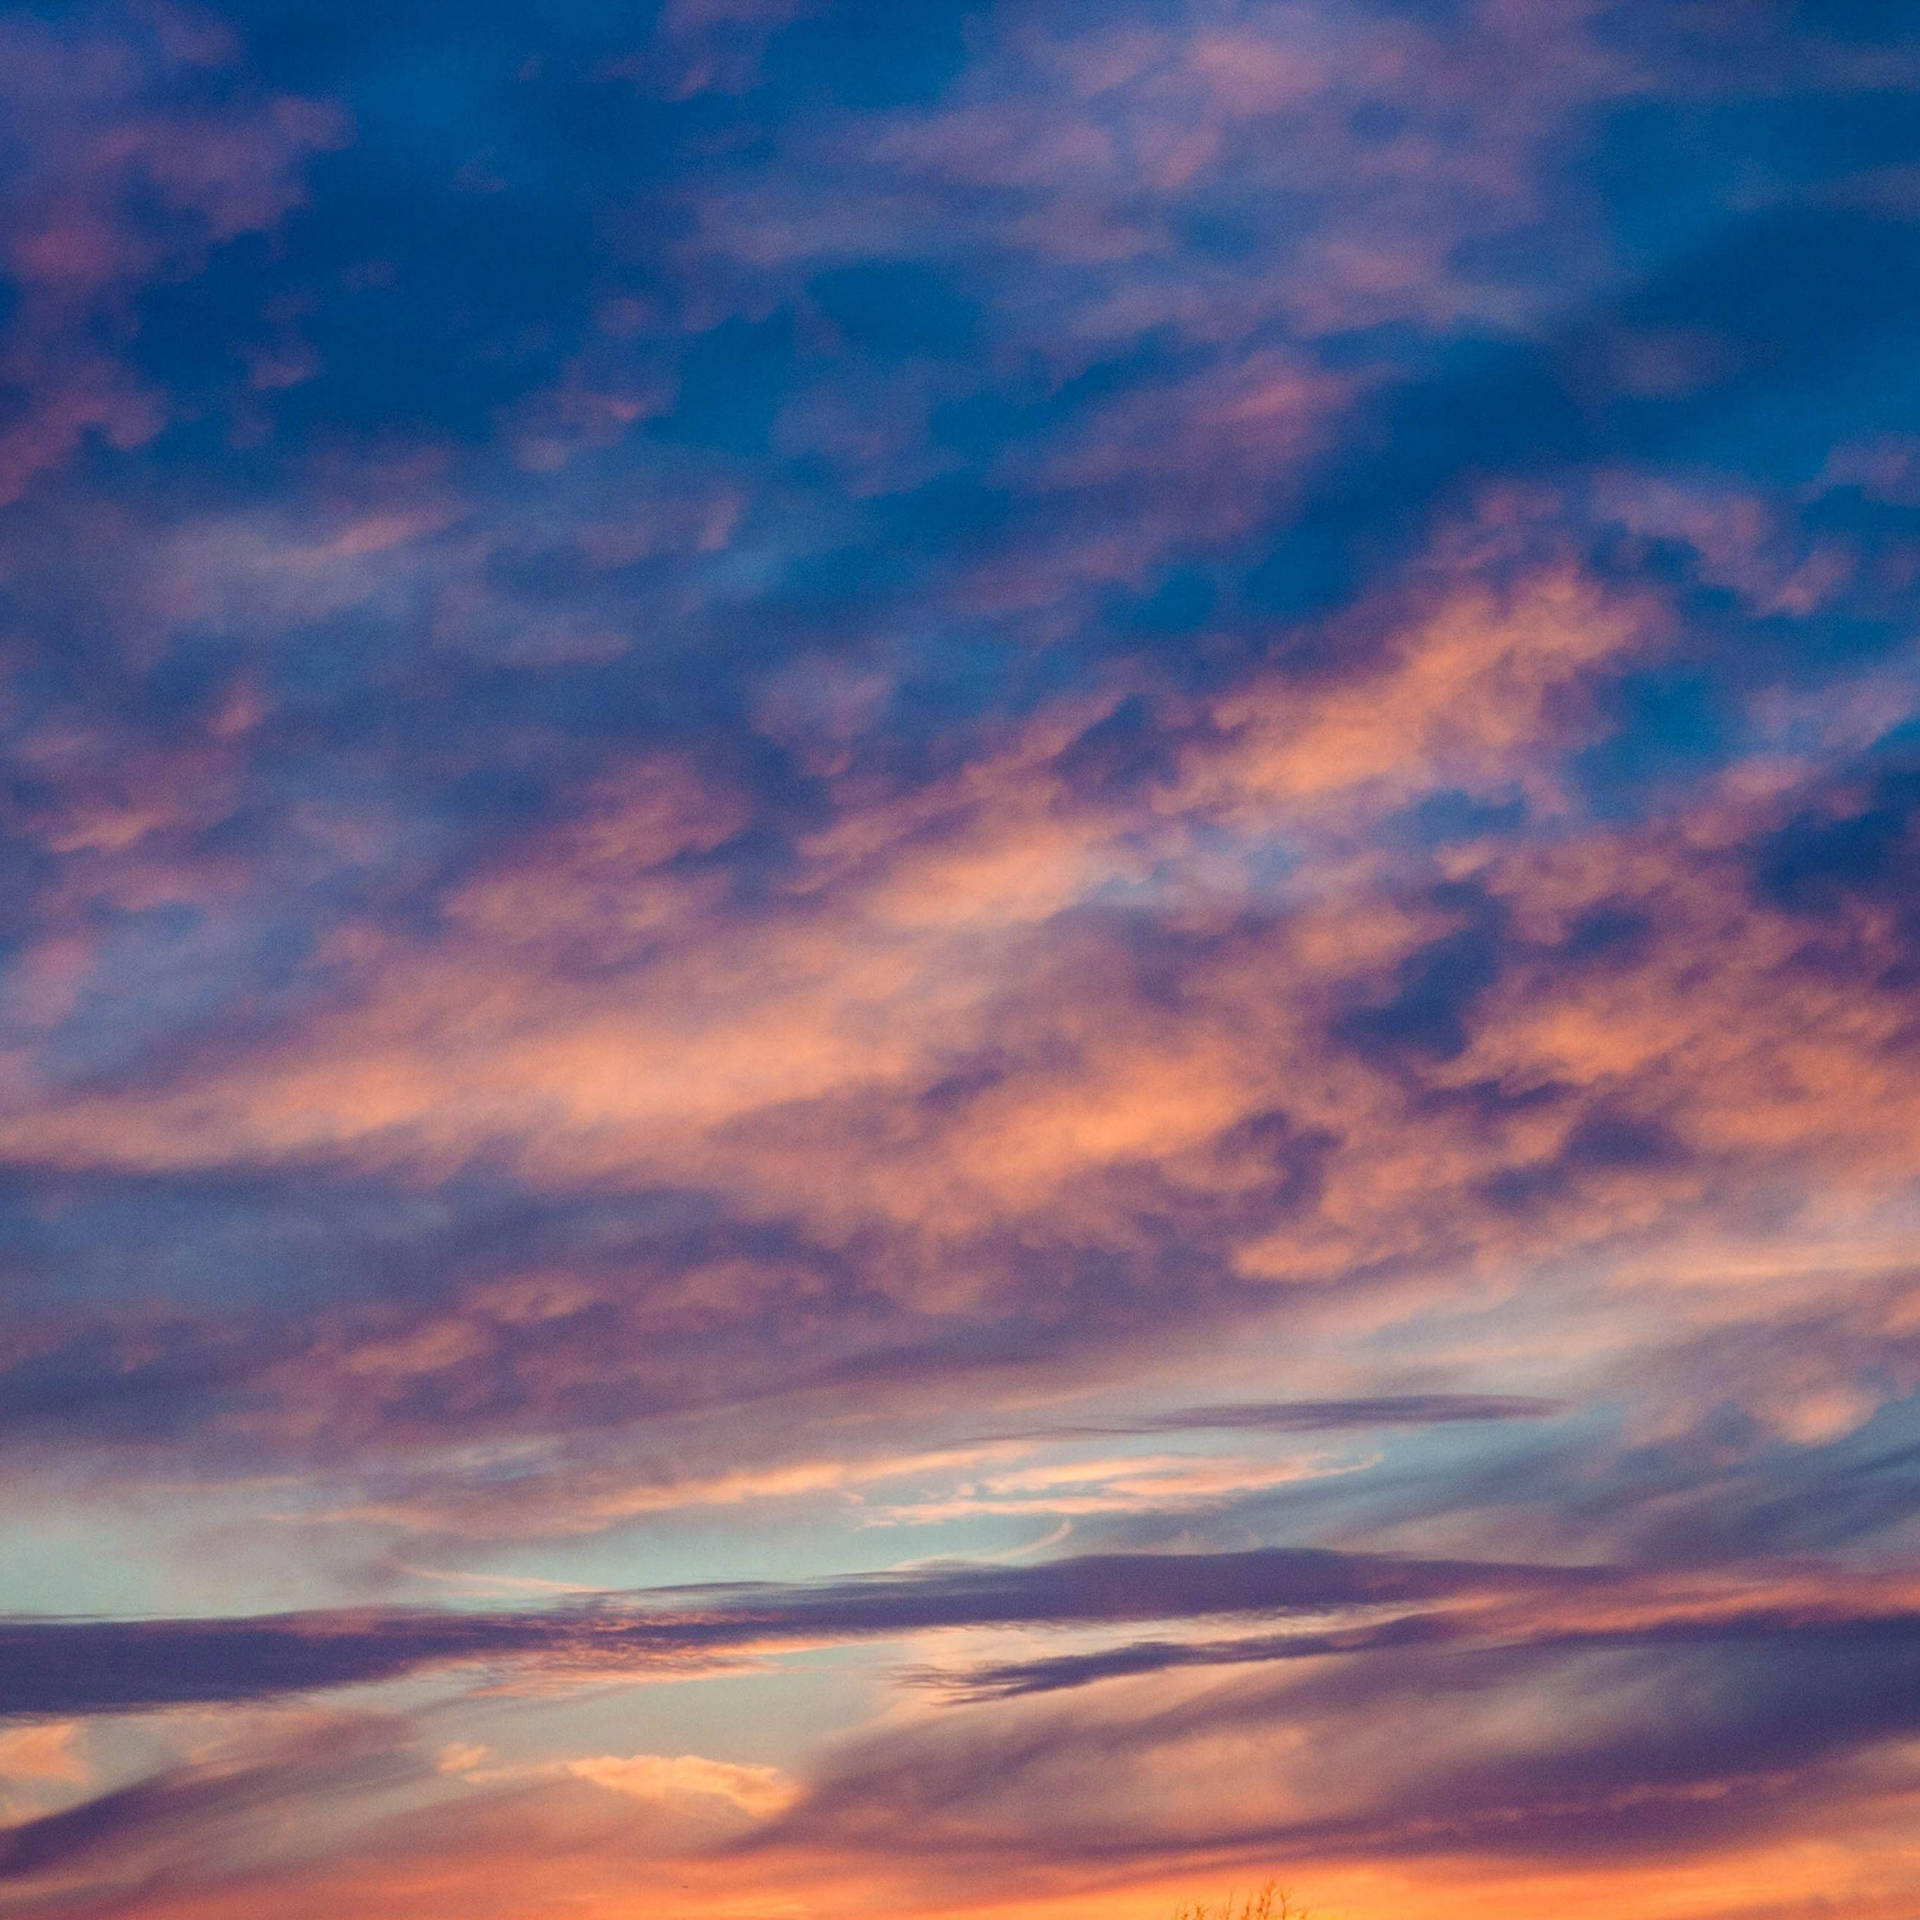 Ipad Pro Cloudy Sky During Sunset